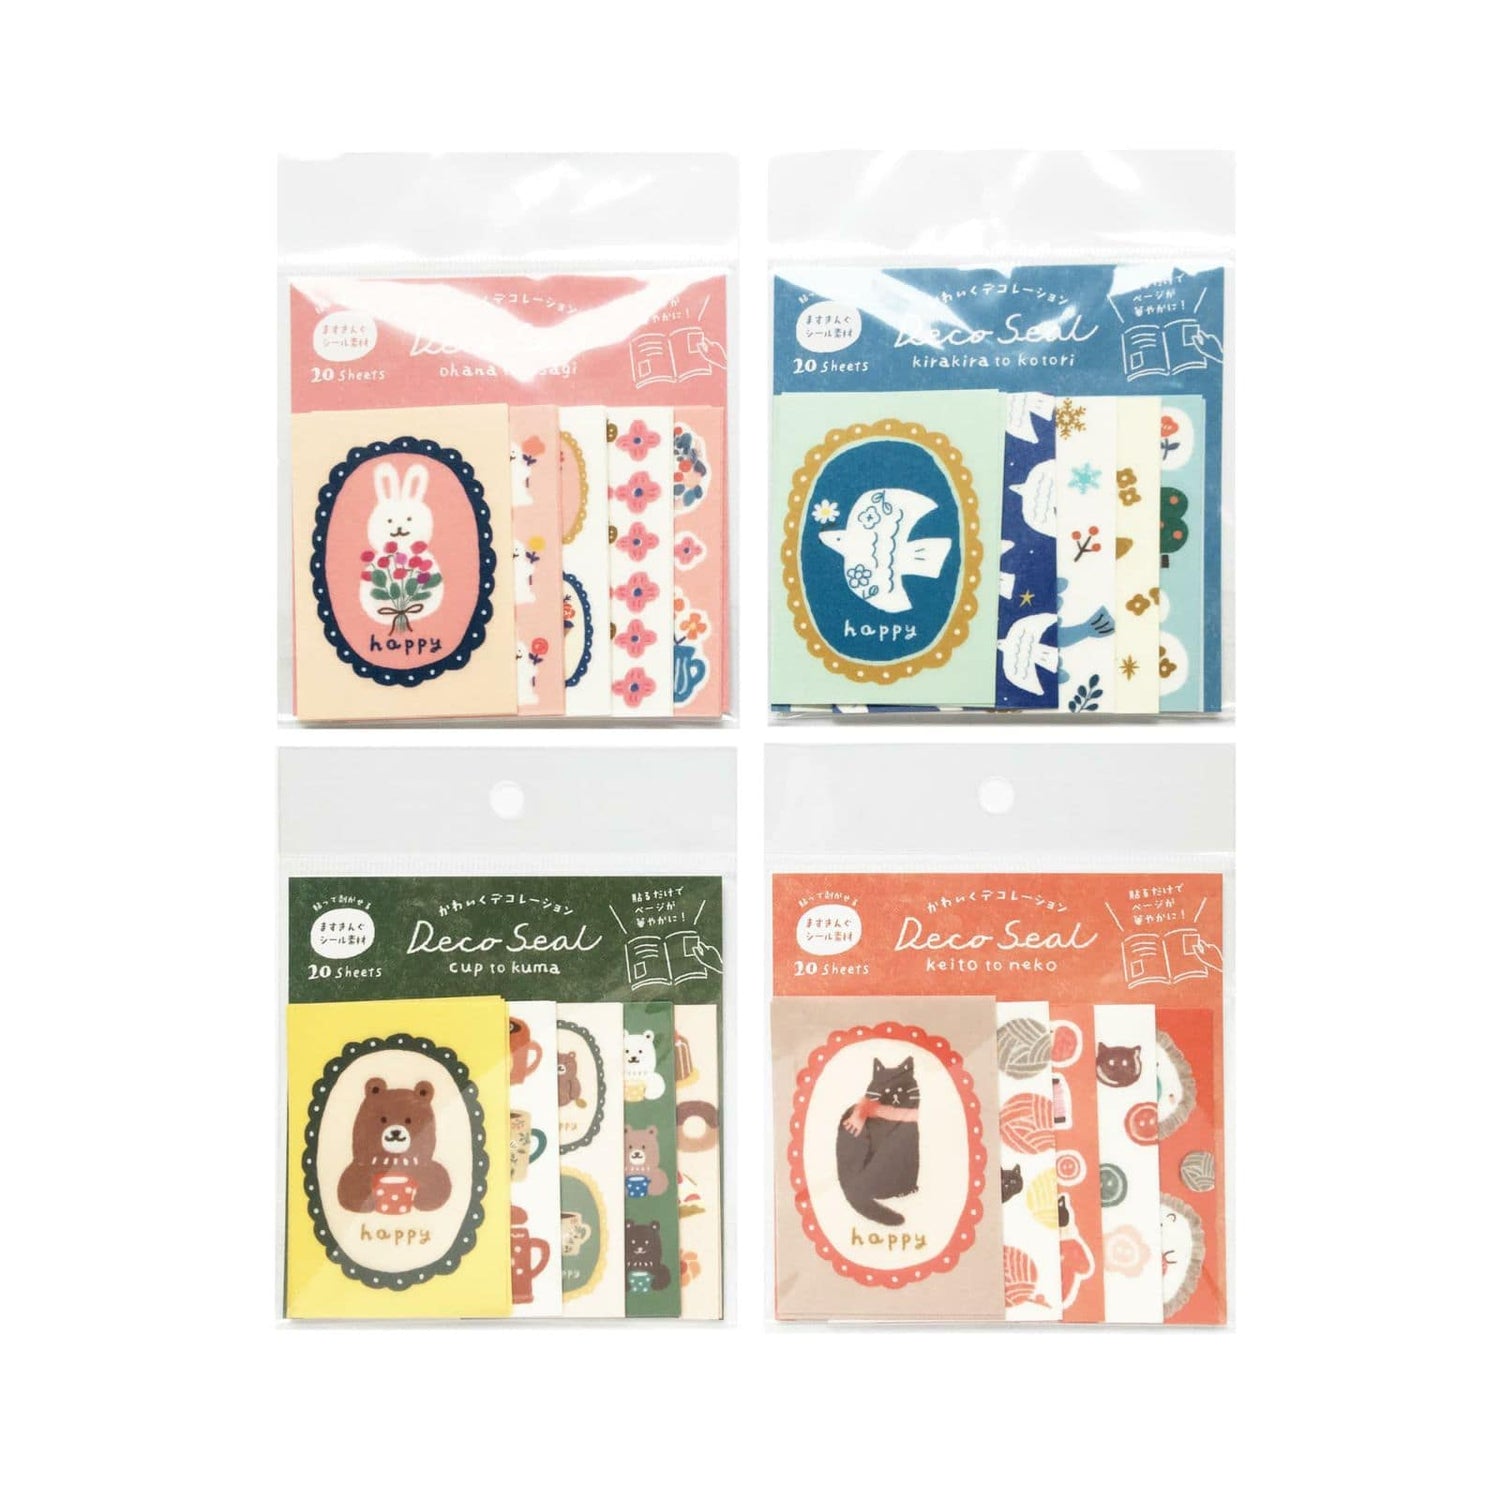 Stickers Deco Seal Ohana To Usagi